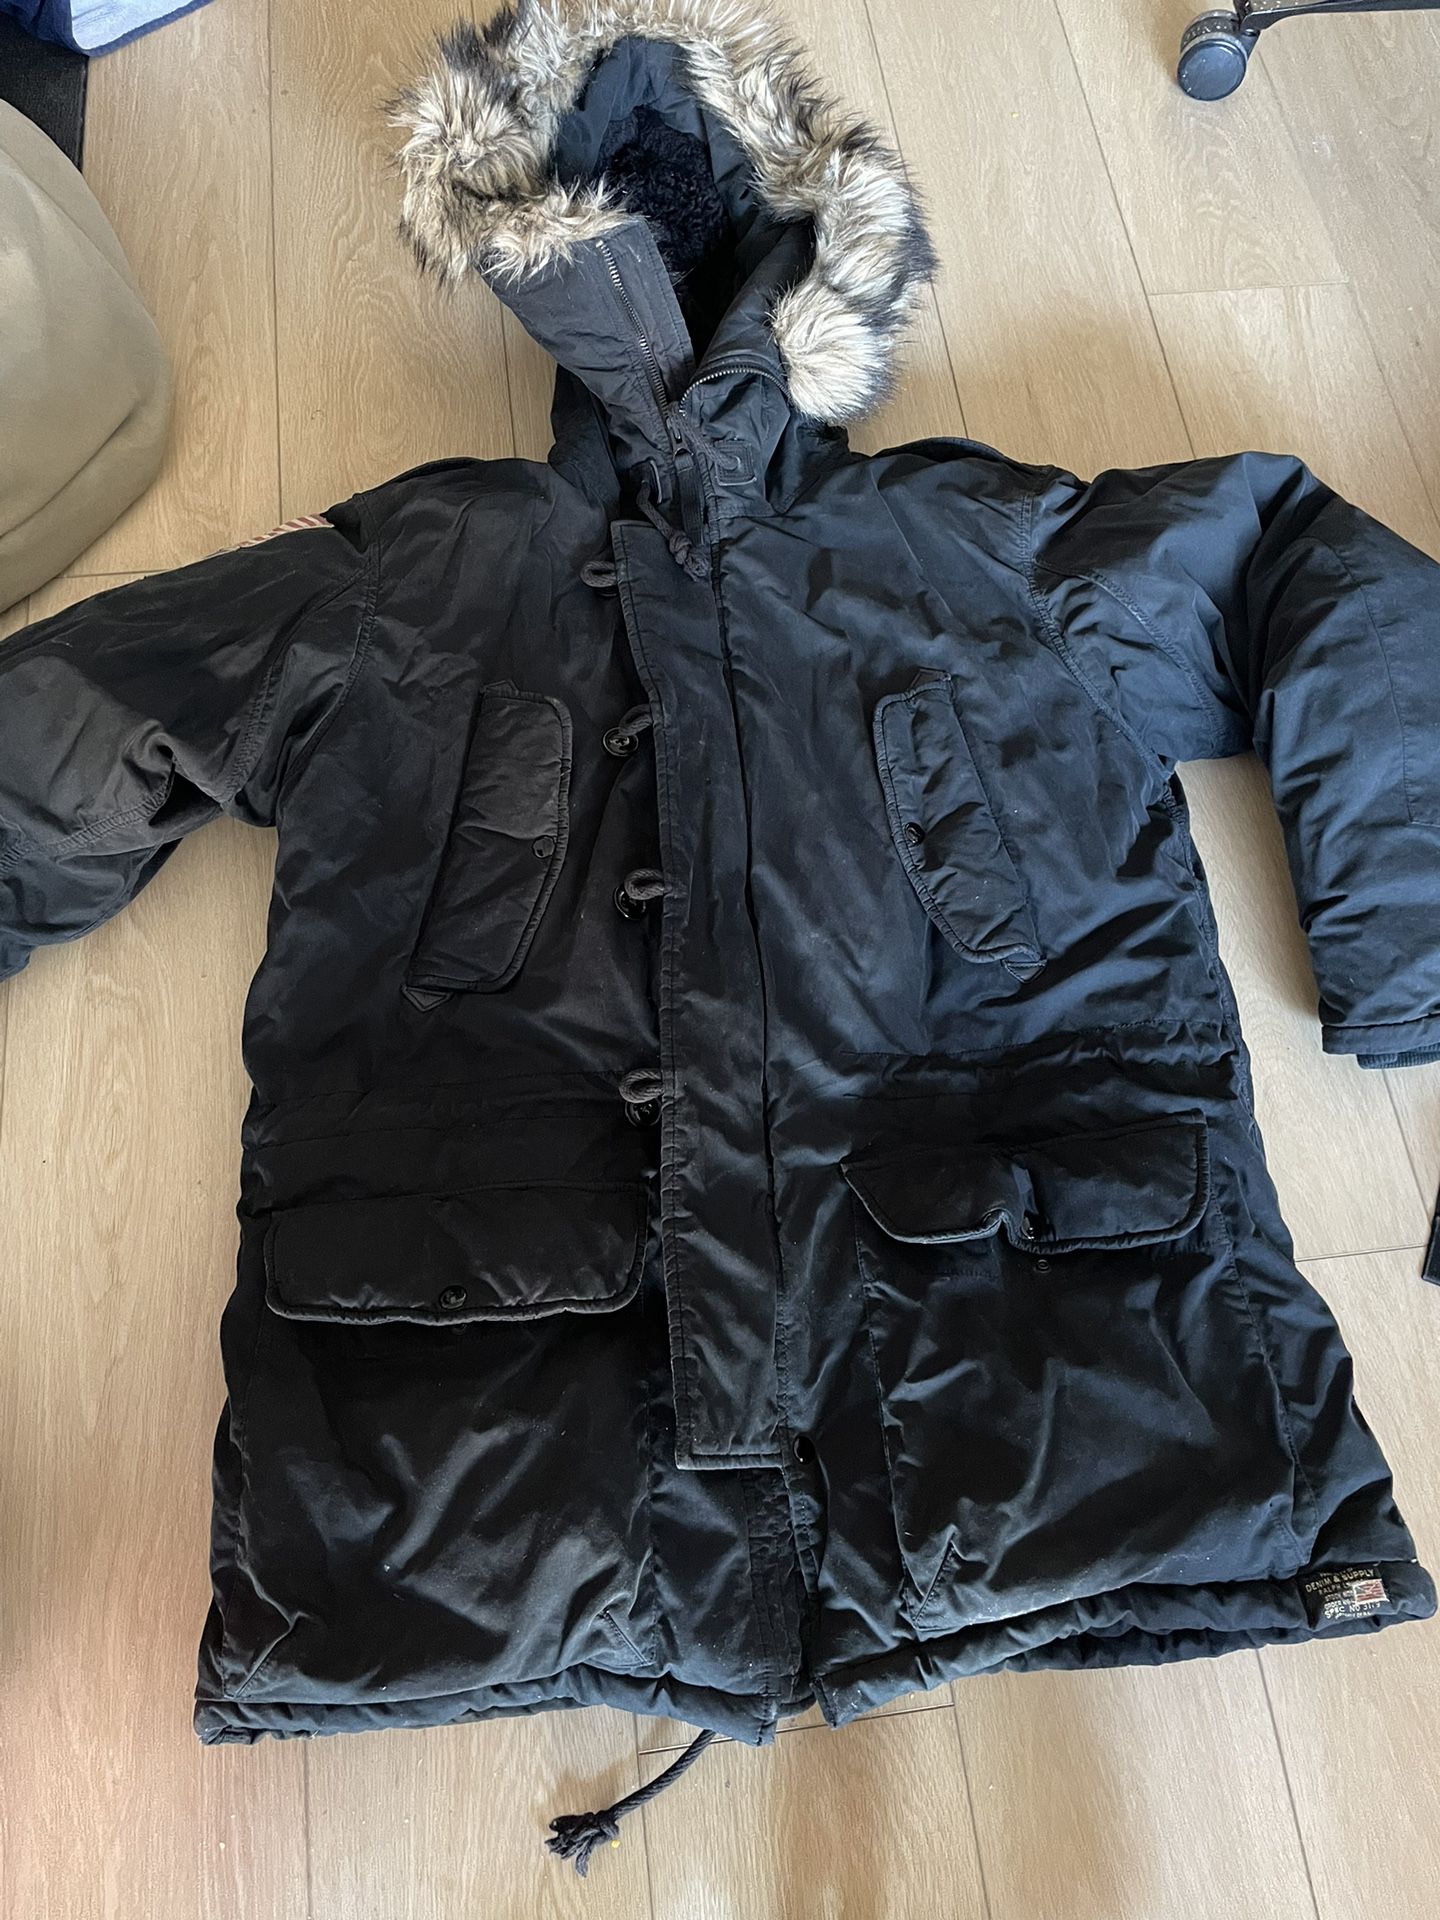 Used Authentic Polo Ralph Lauren Denim & Supply Black USA Winter Coat Size XL